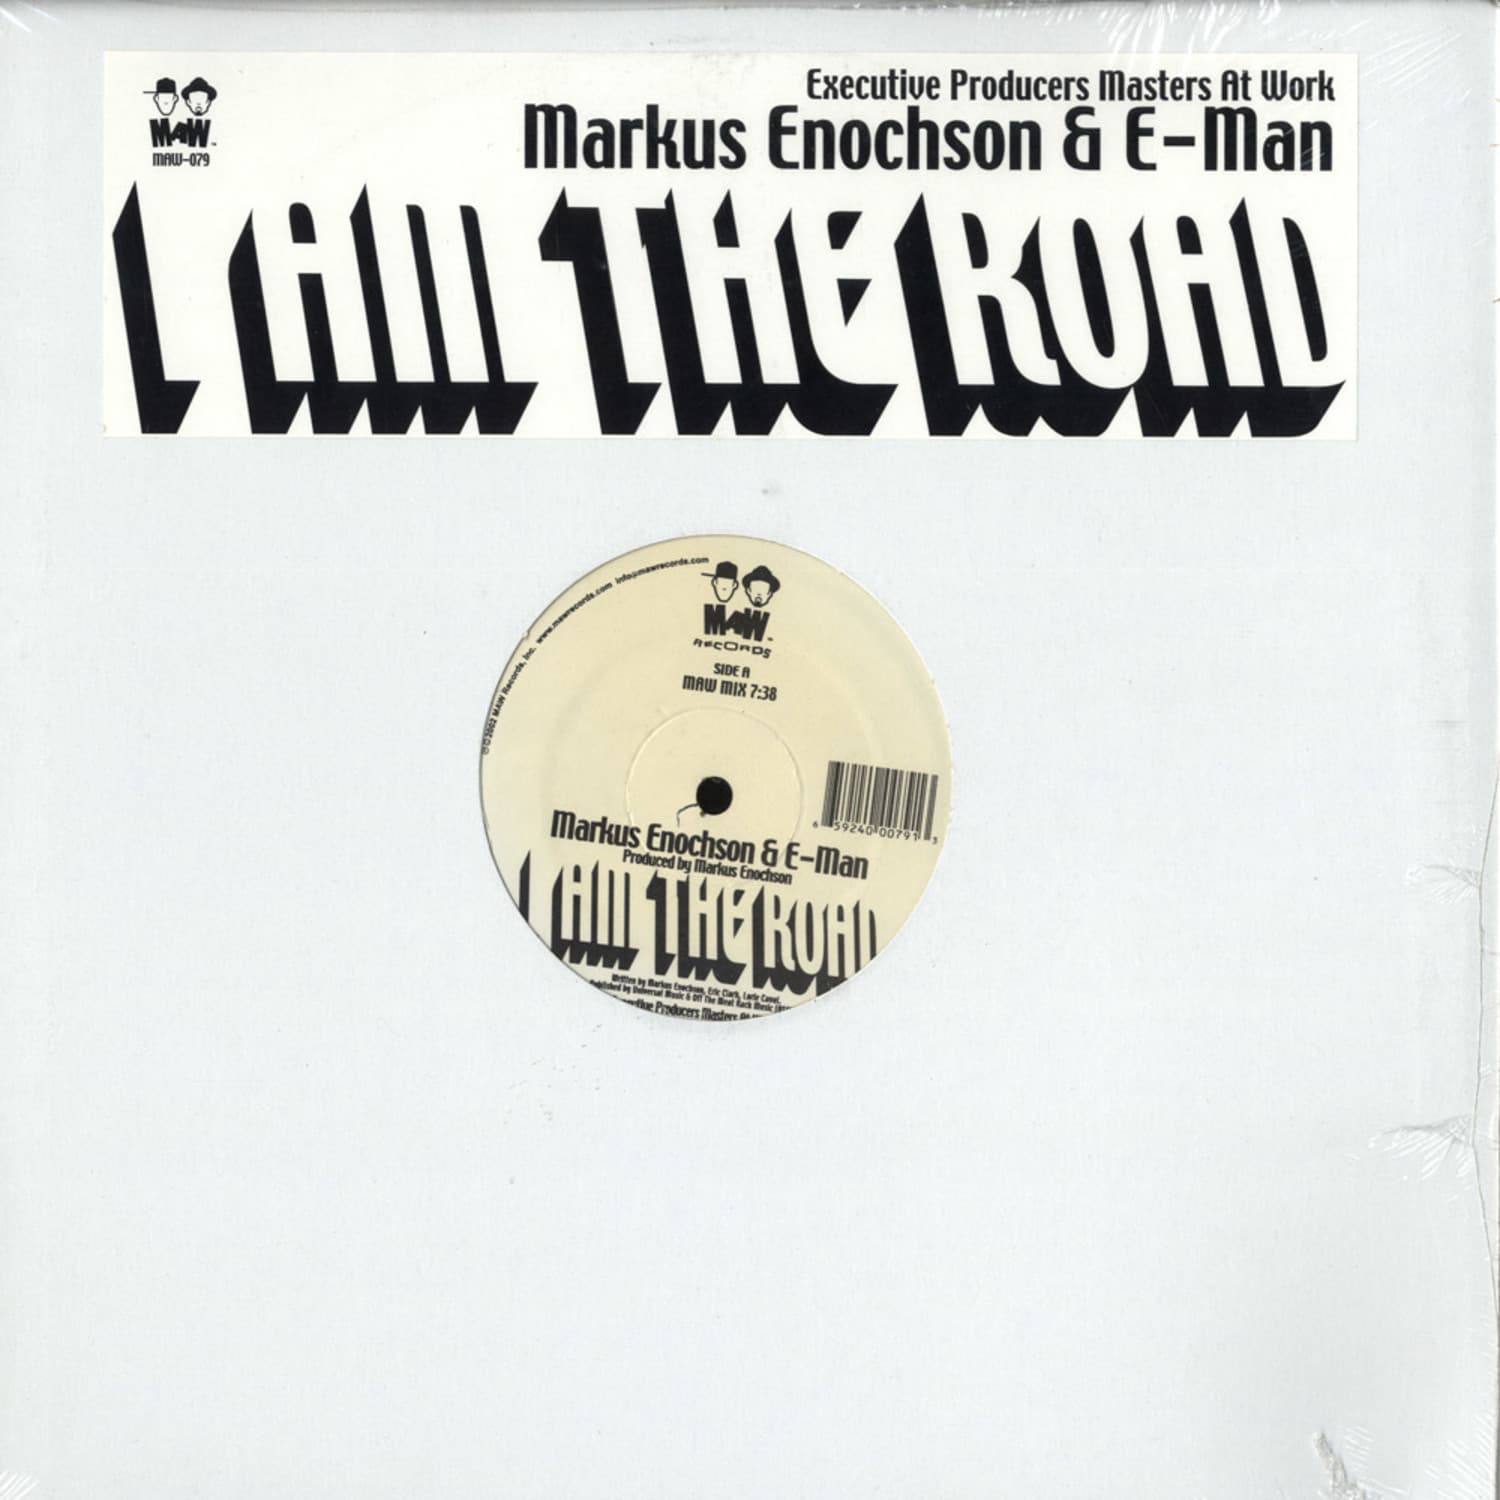 Markus Enochson & E-man - I AM THE ROAD